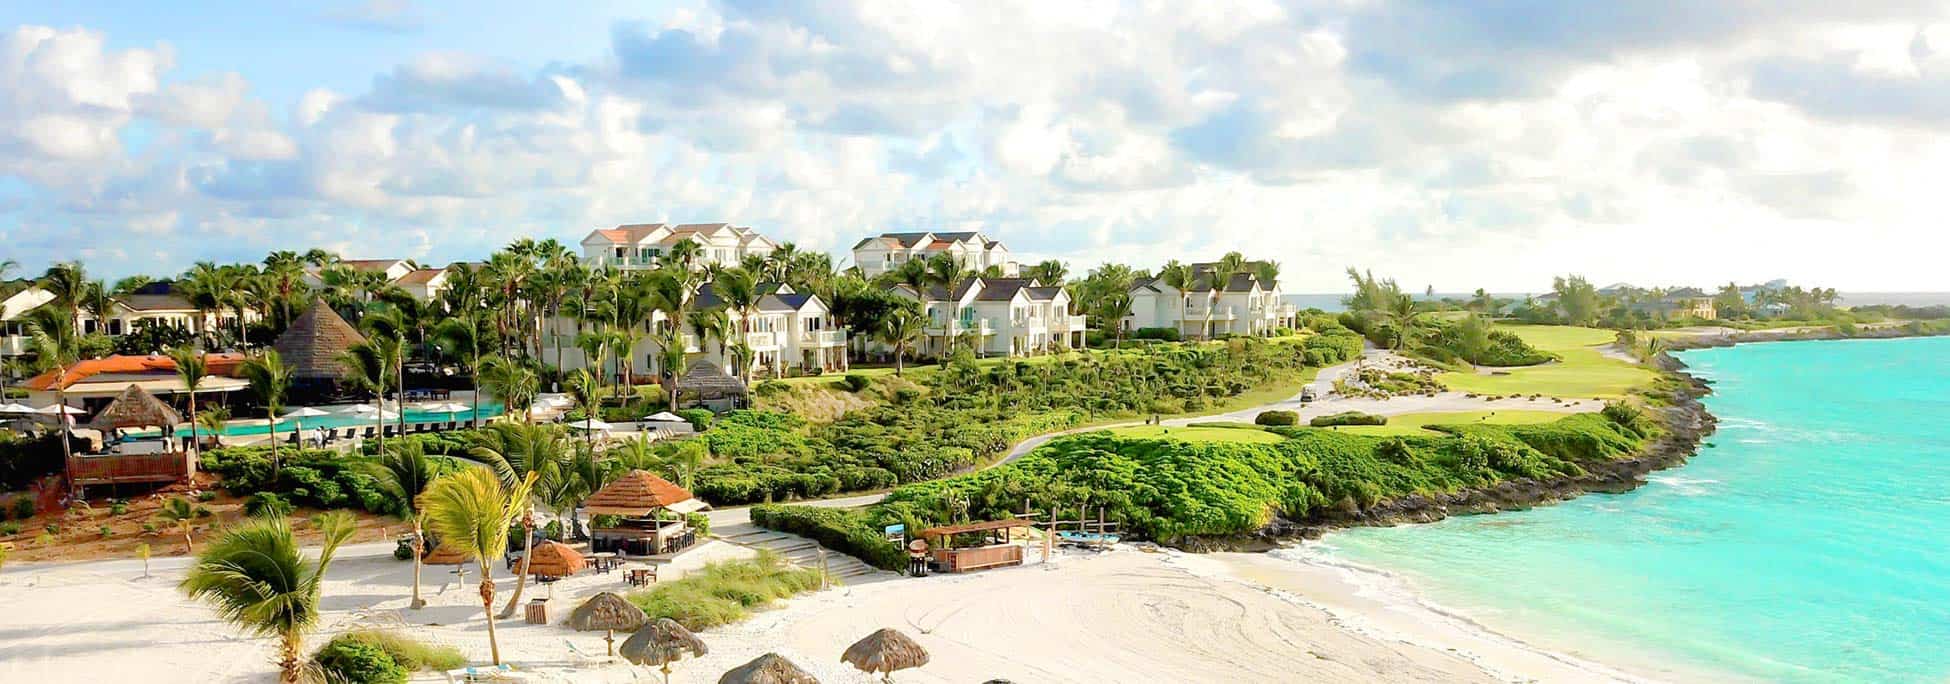 Grand Isle Resort Residences And Beach View.